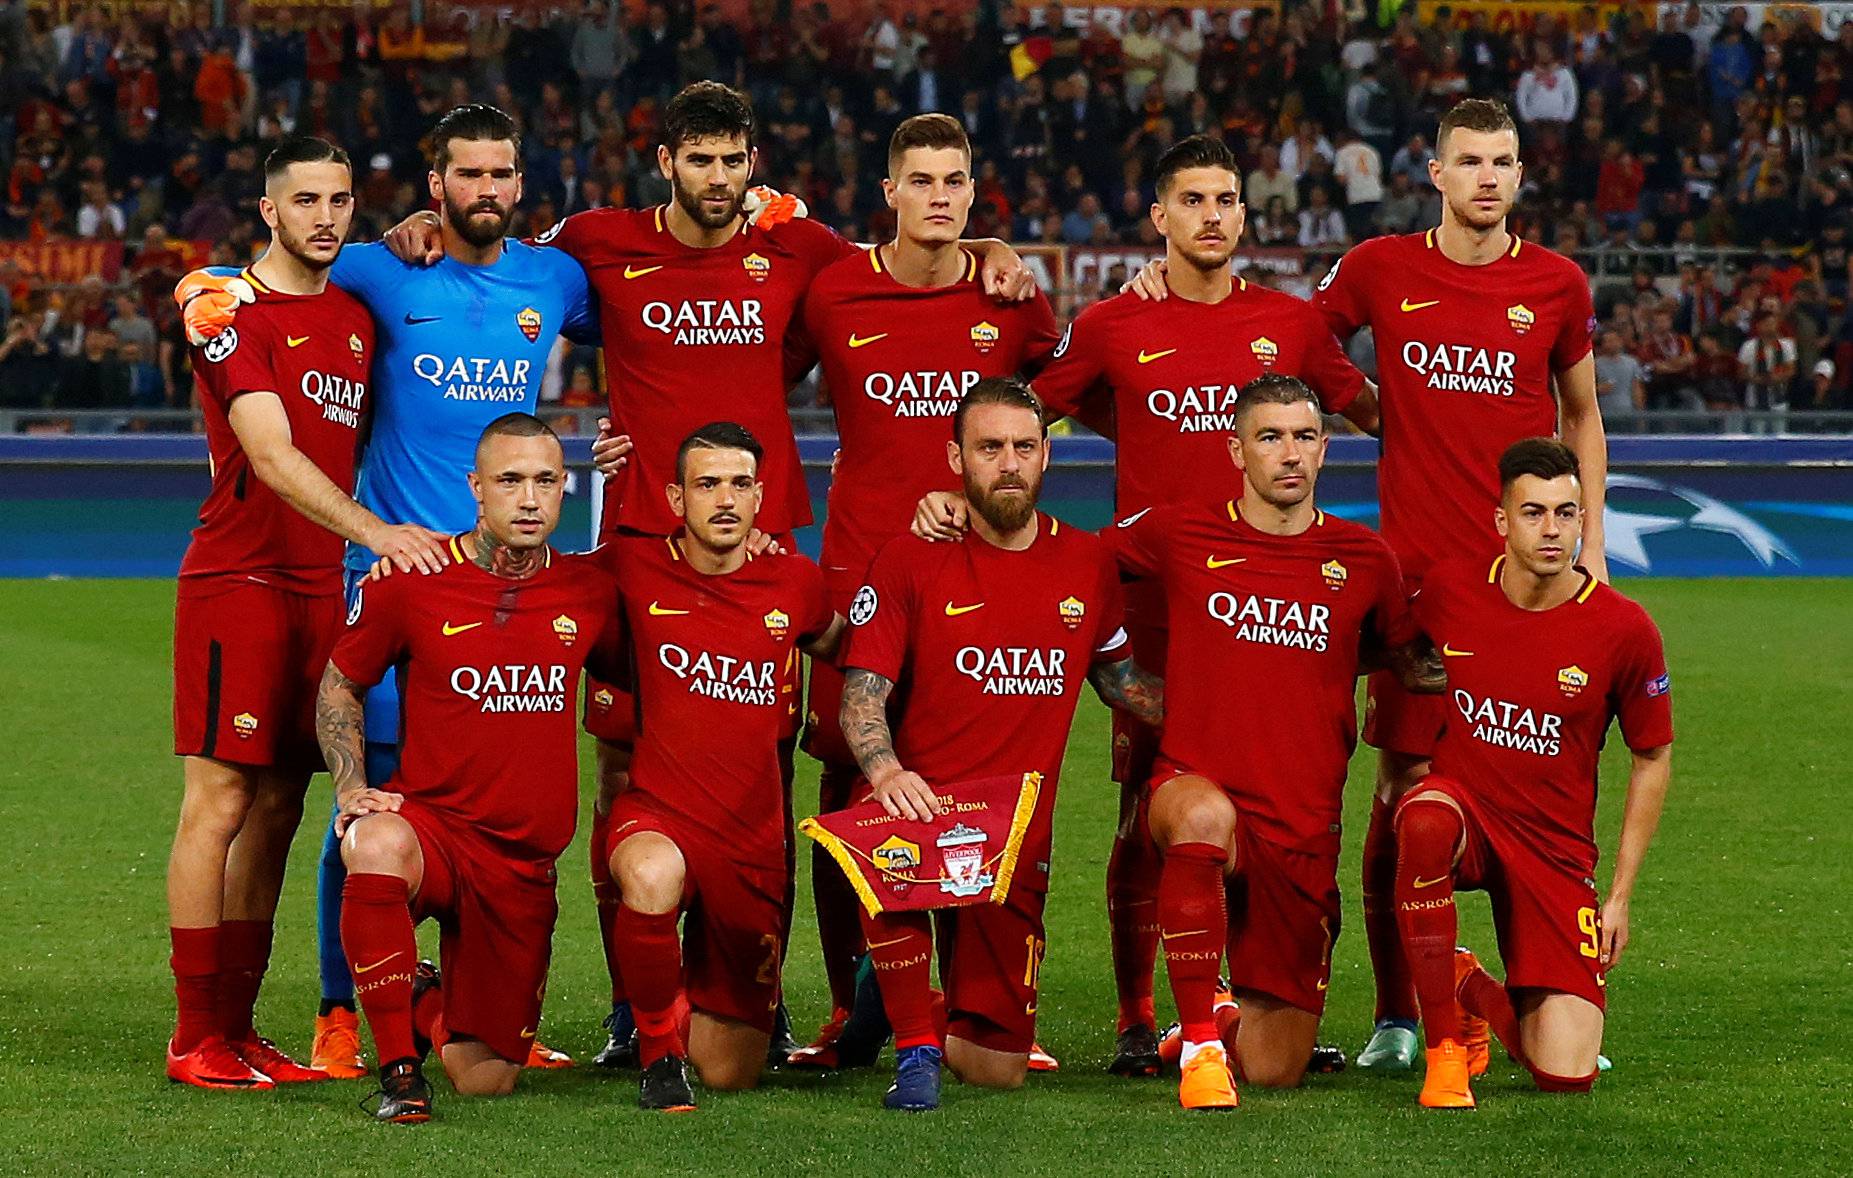 Champions League Semi Final Second Leg - AS Roma v Liverpool